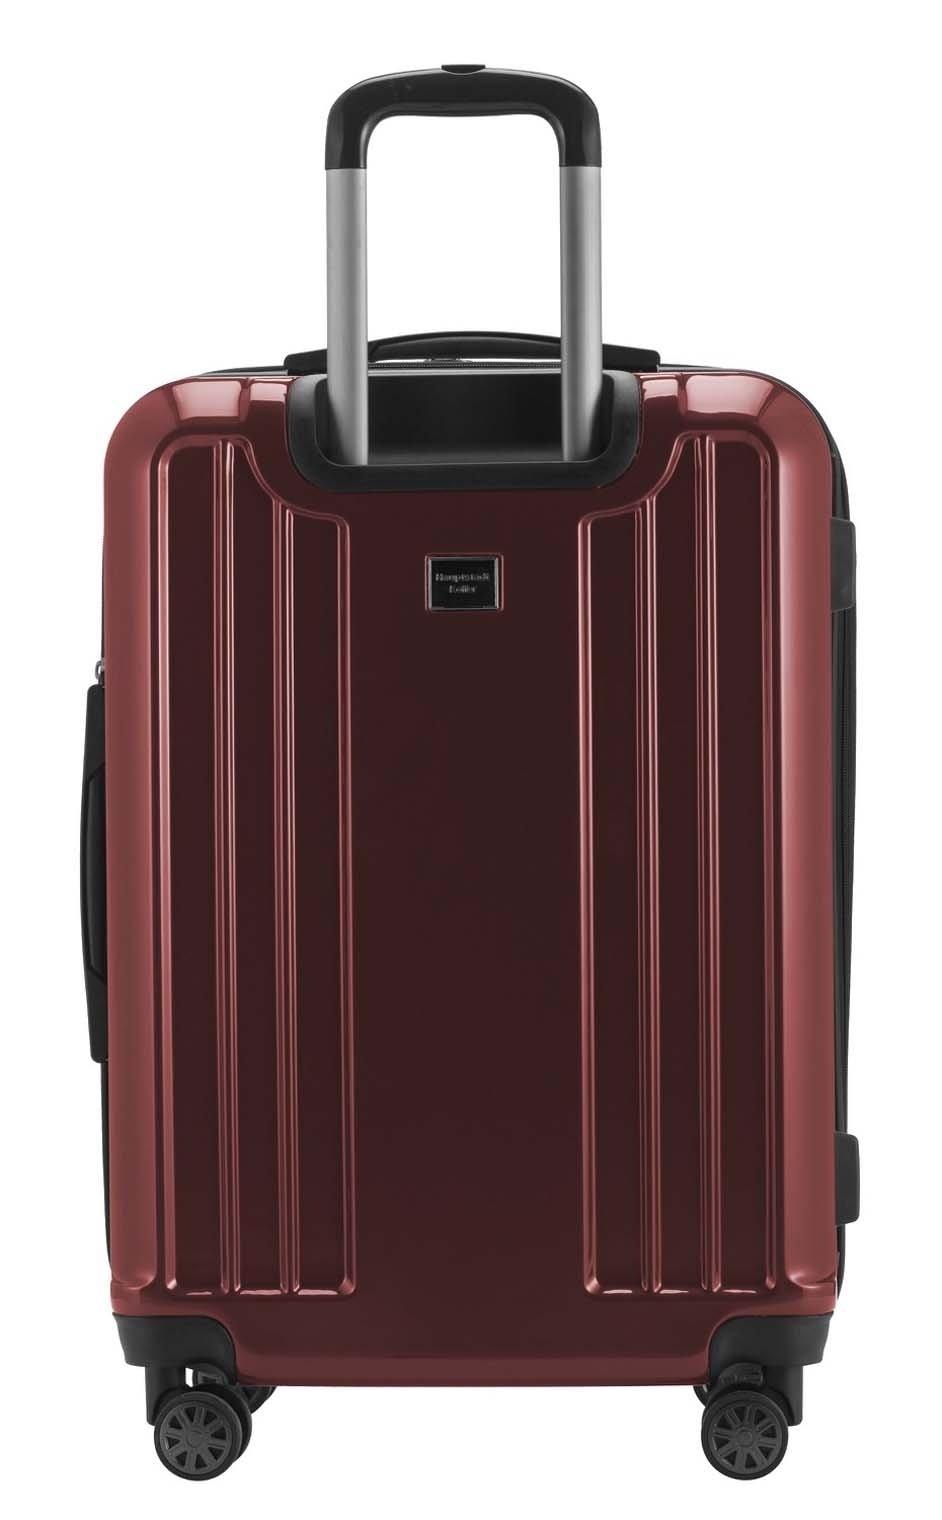 Hauptstadtkoffer ONE SIZE, X-Berg bagage à main rigide avec TSA surface mate bordeaux  